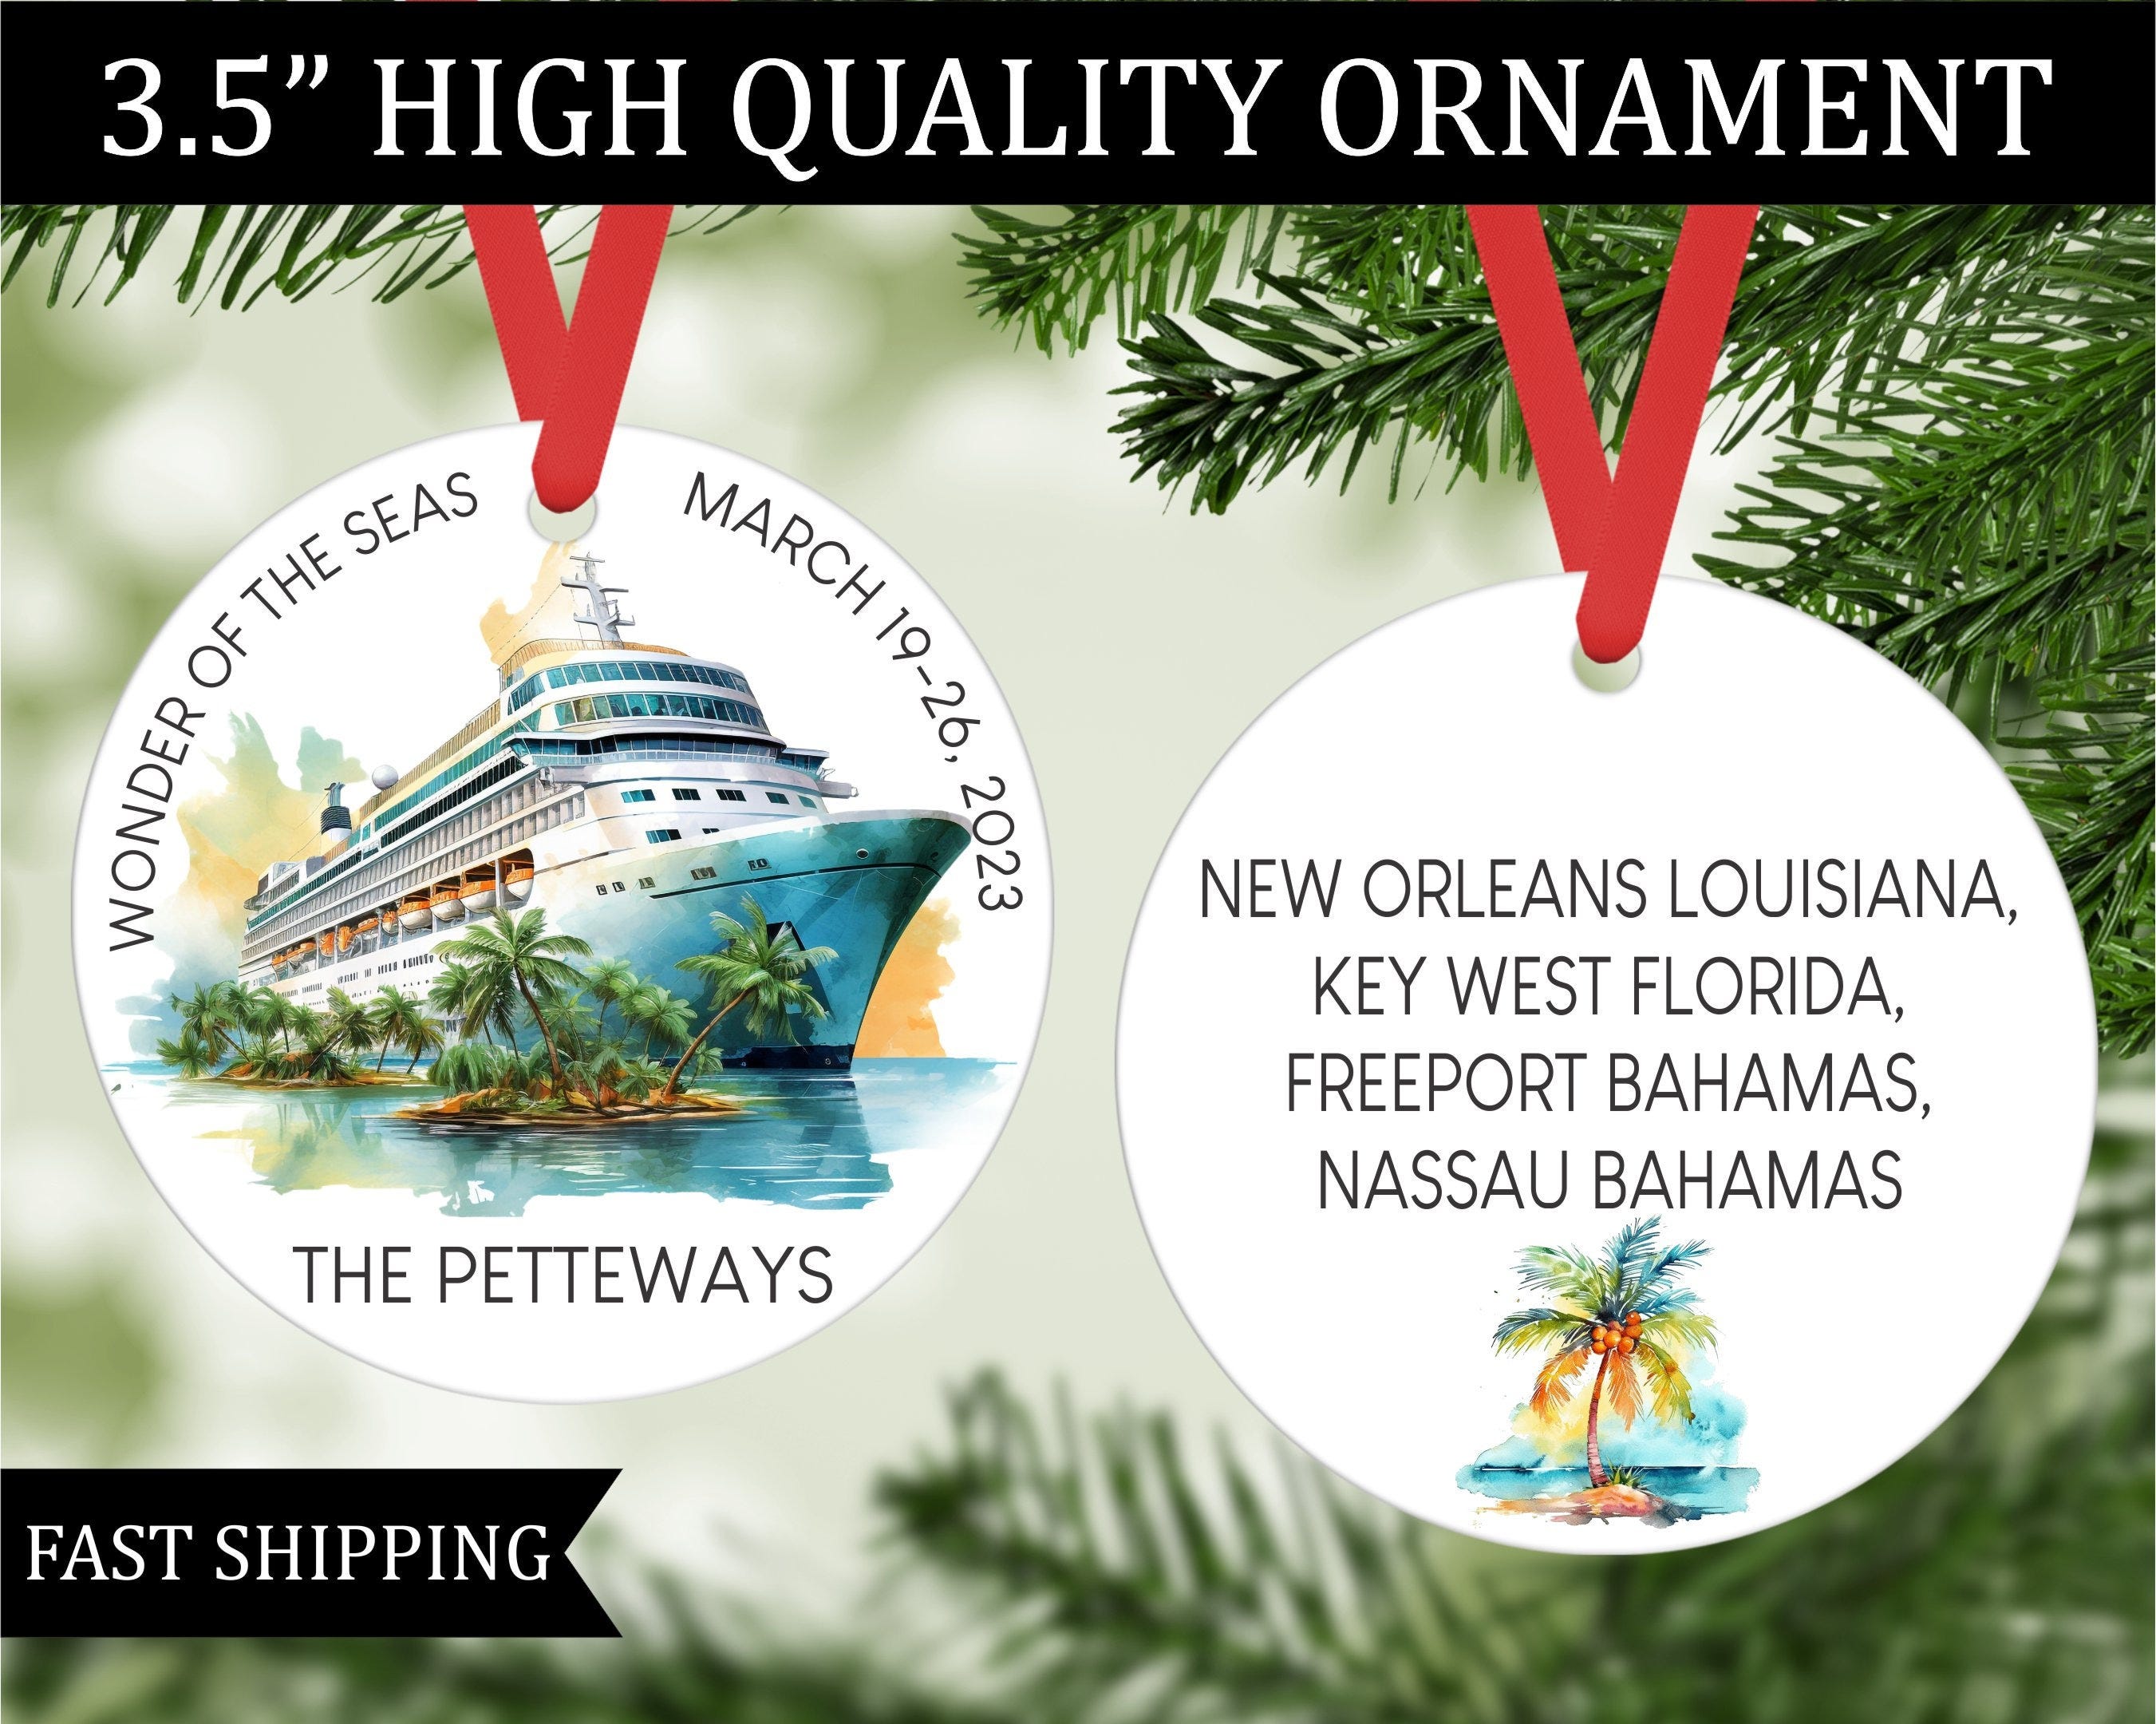 Personalized Cruise Ornament, Cruise Gift, Christmas Gift for Friends, Cruise, Cruise Keepsake